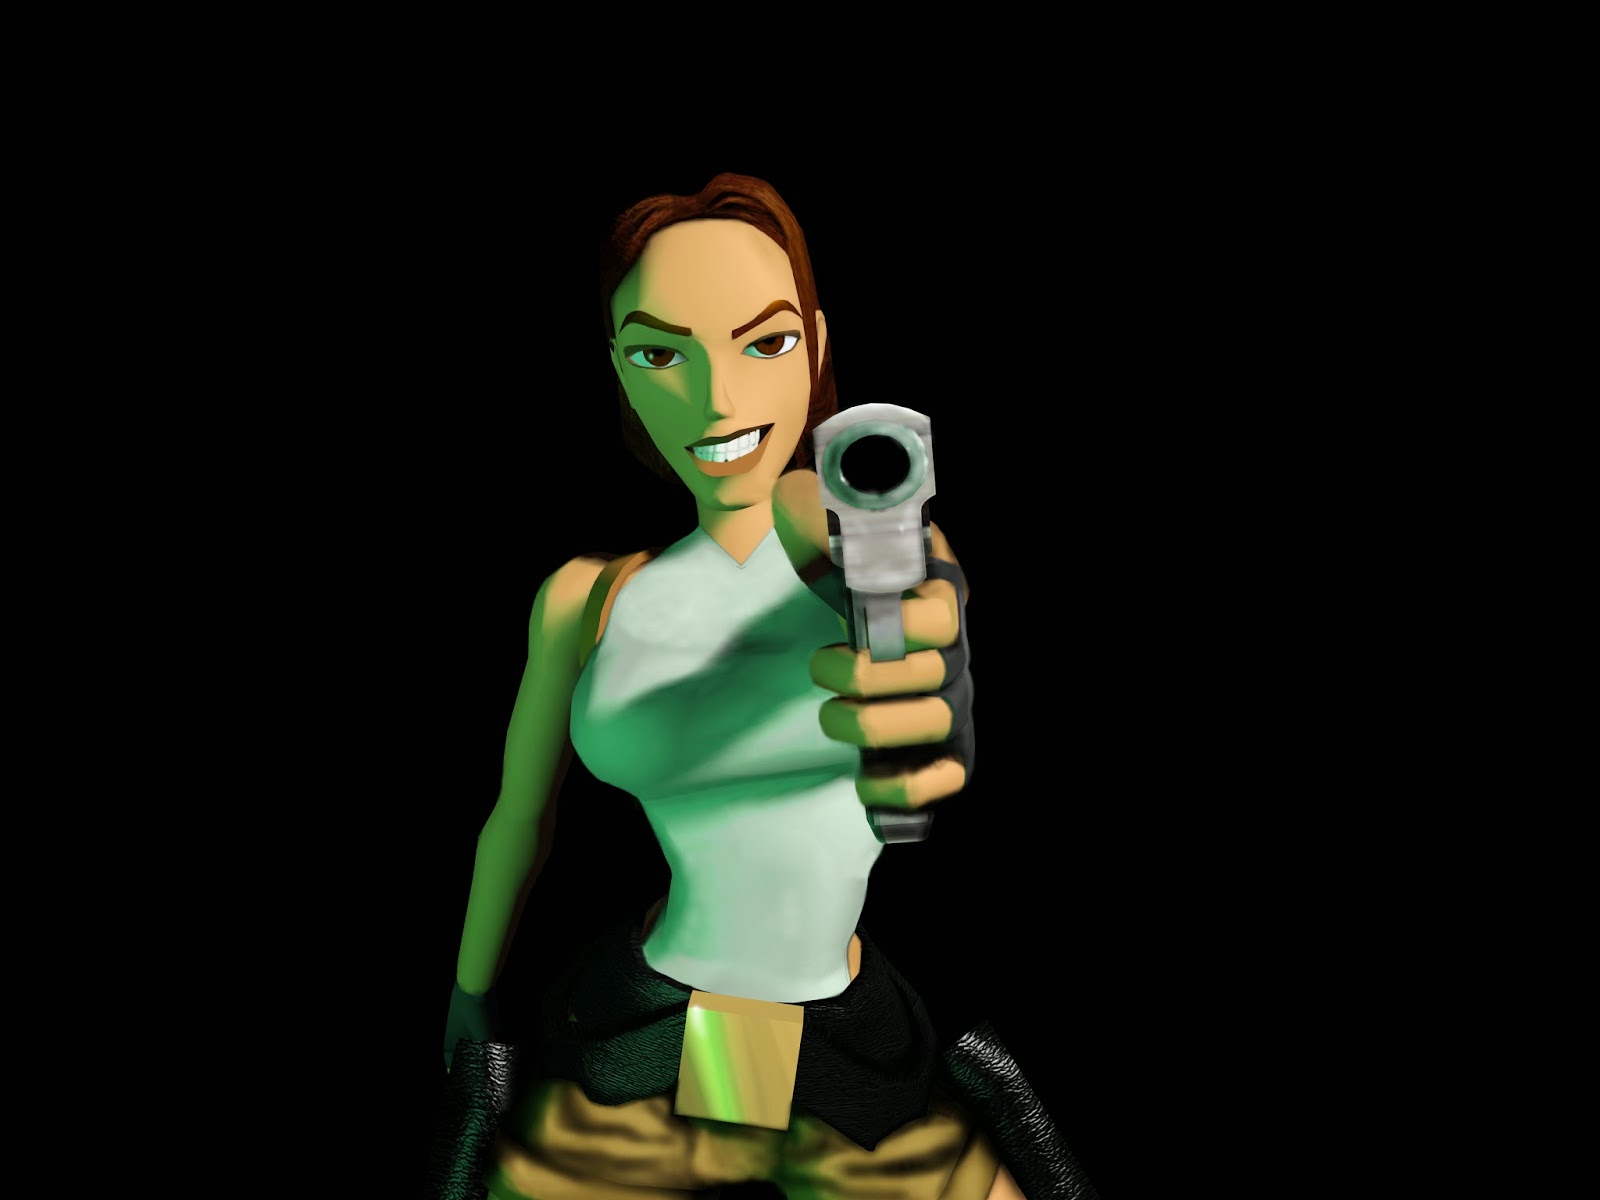 CHEAT Tomb Raider Starring Lara Croft 2